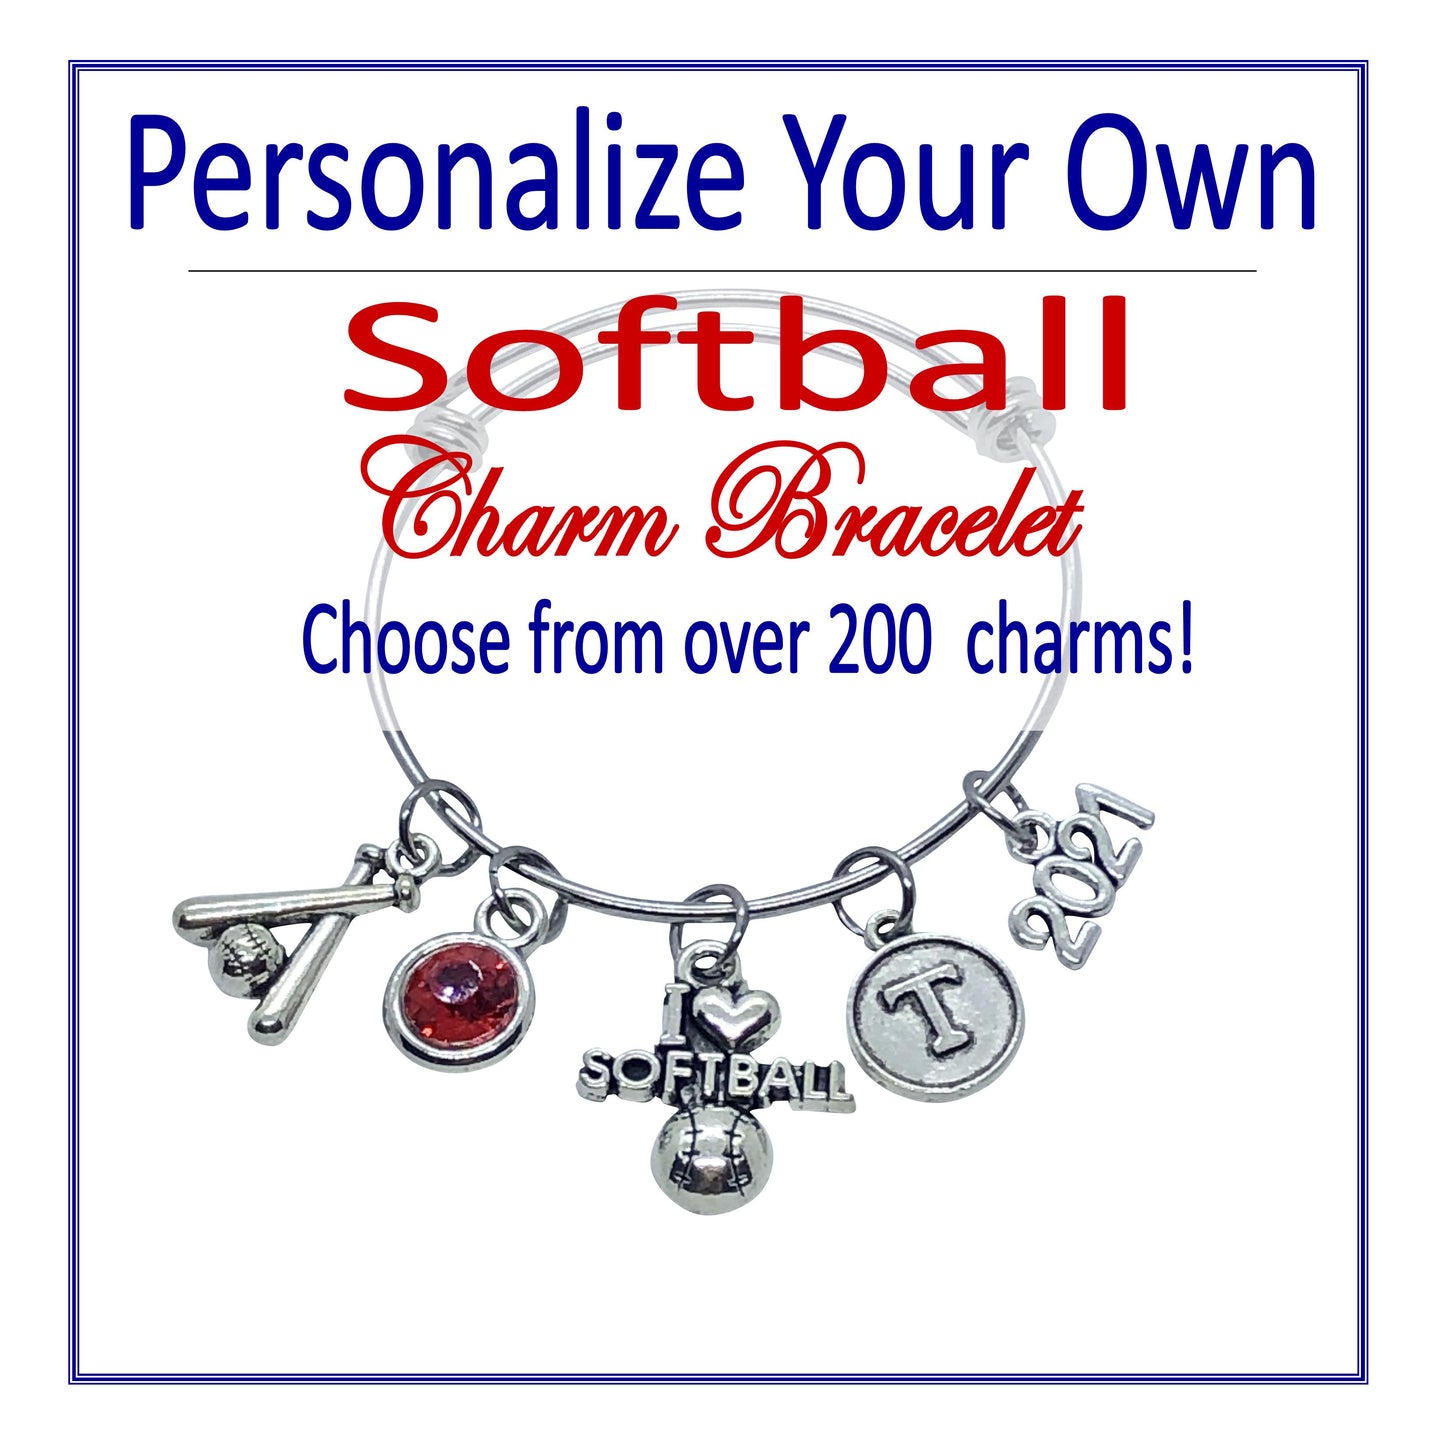 Create Your Own Softball Charm Bracelet - Cheer and Dance On Demand